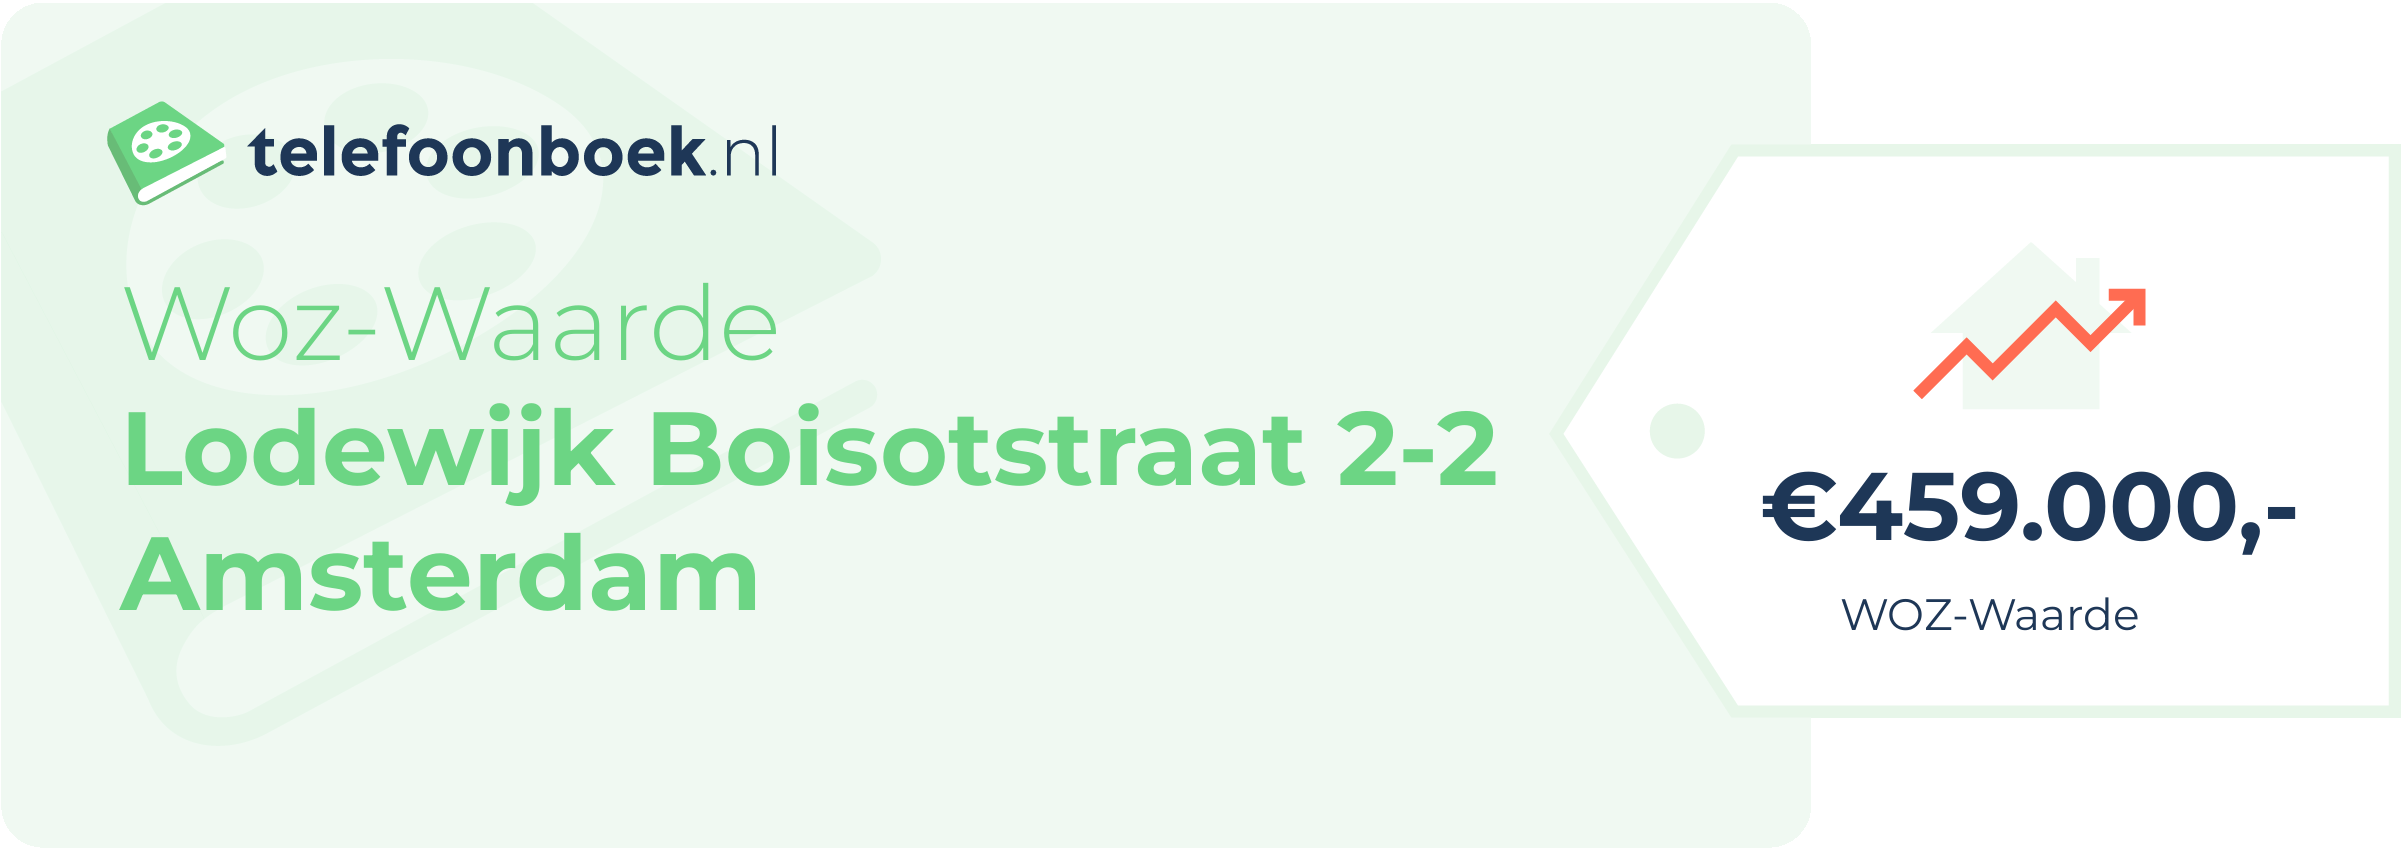 WOZ-waarde Lodewijk Boisotstraat 2-2 Amsterdam